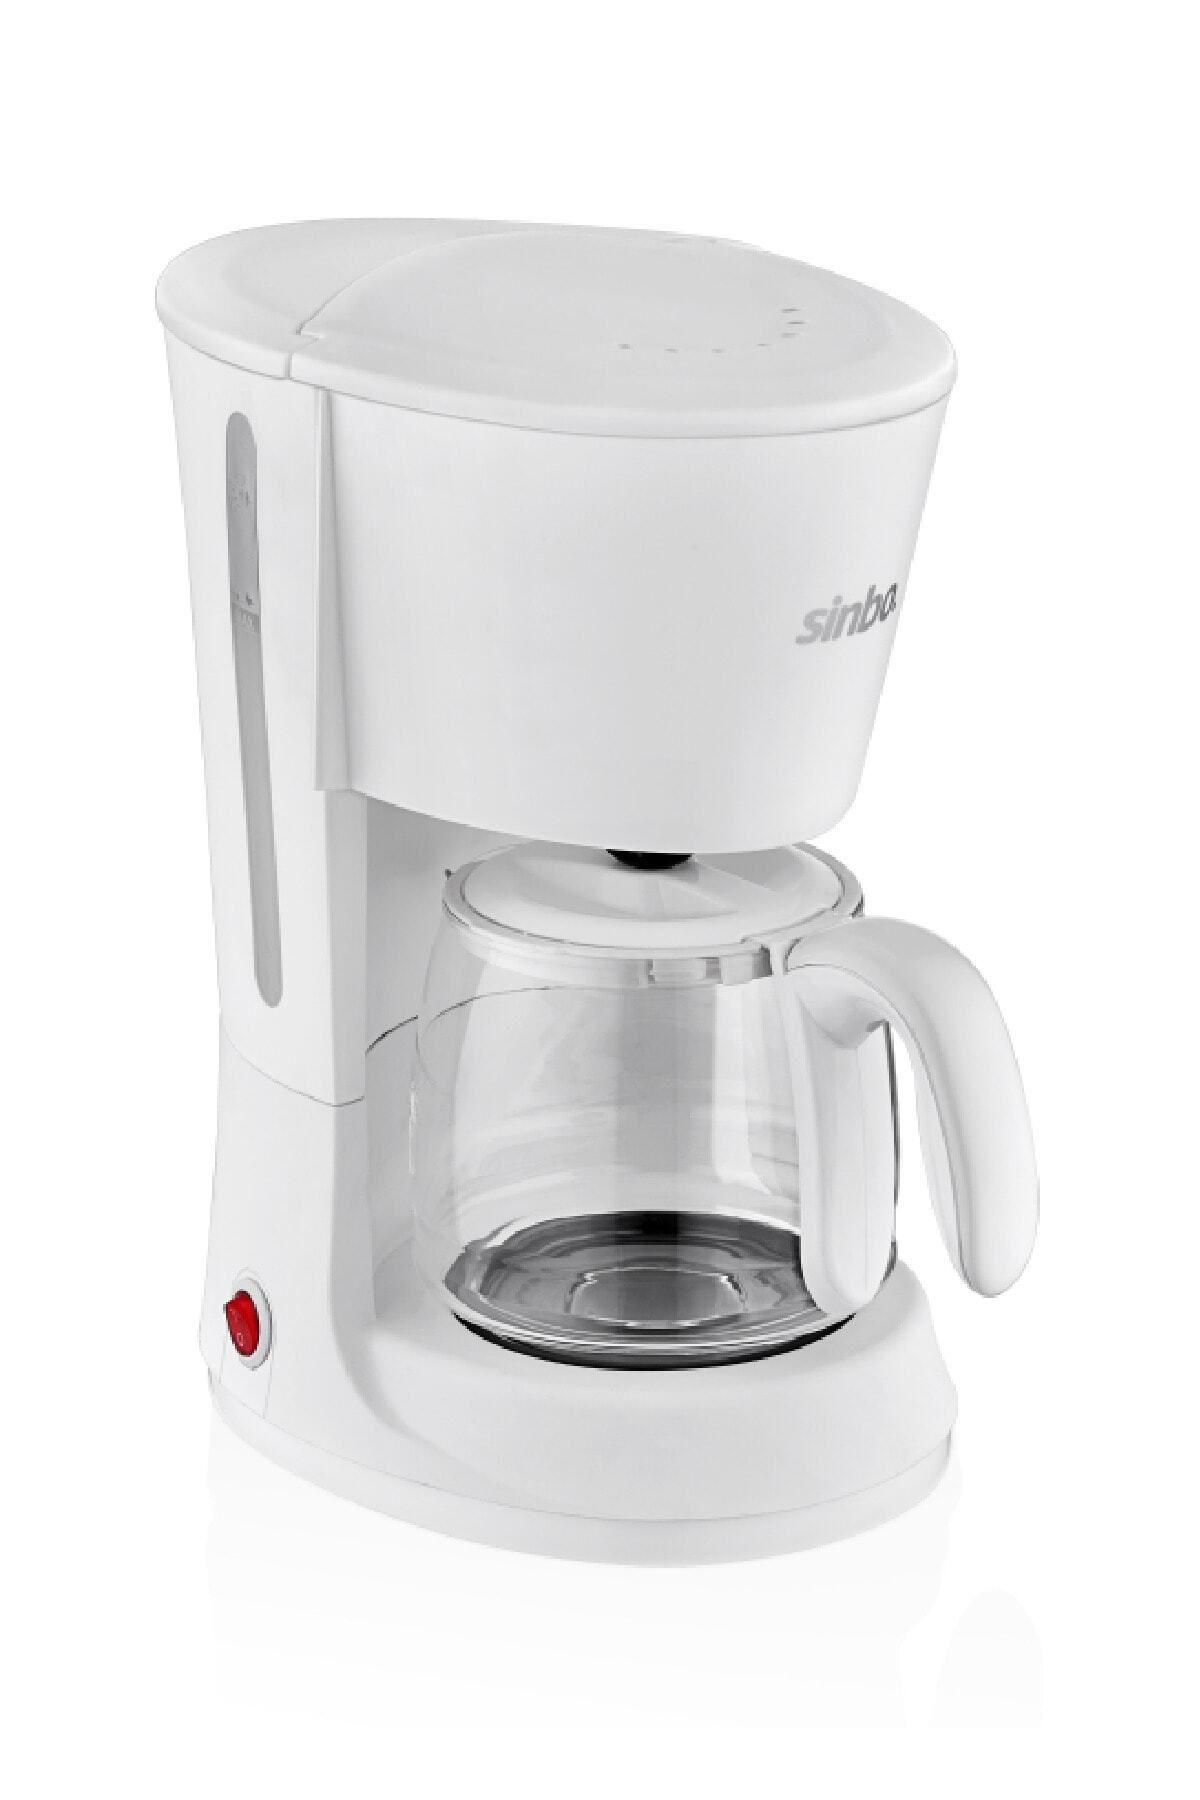 Sinbo SCM-2938 Filtre Kahve Makinesi / Beyaz